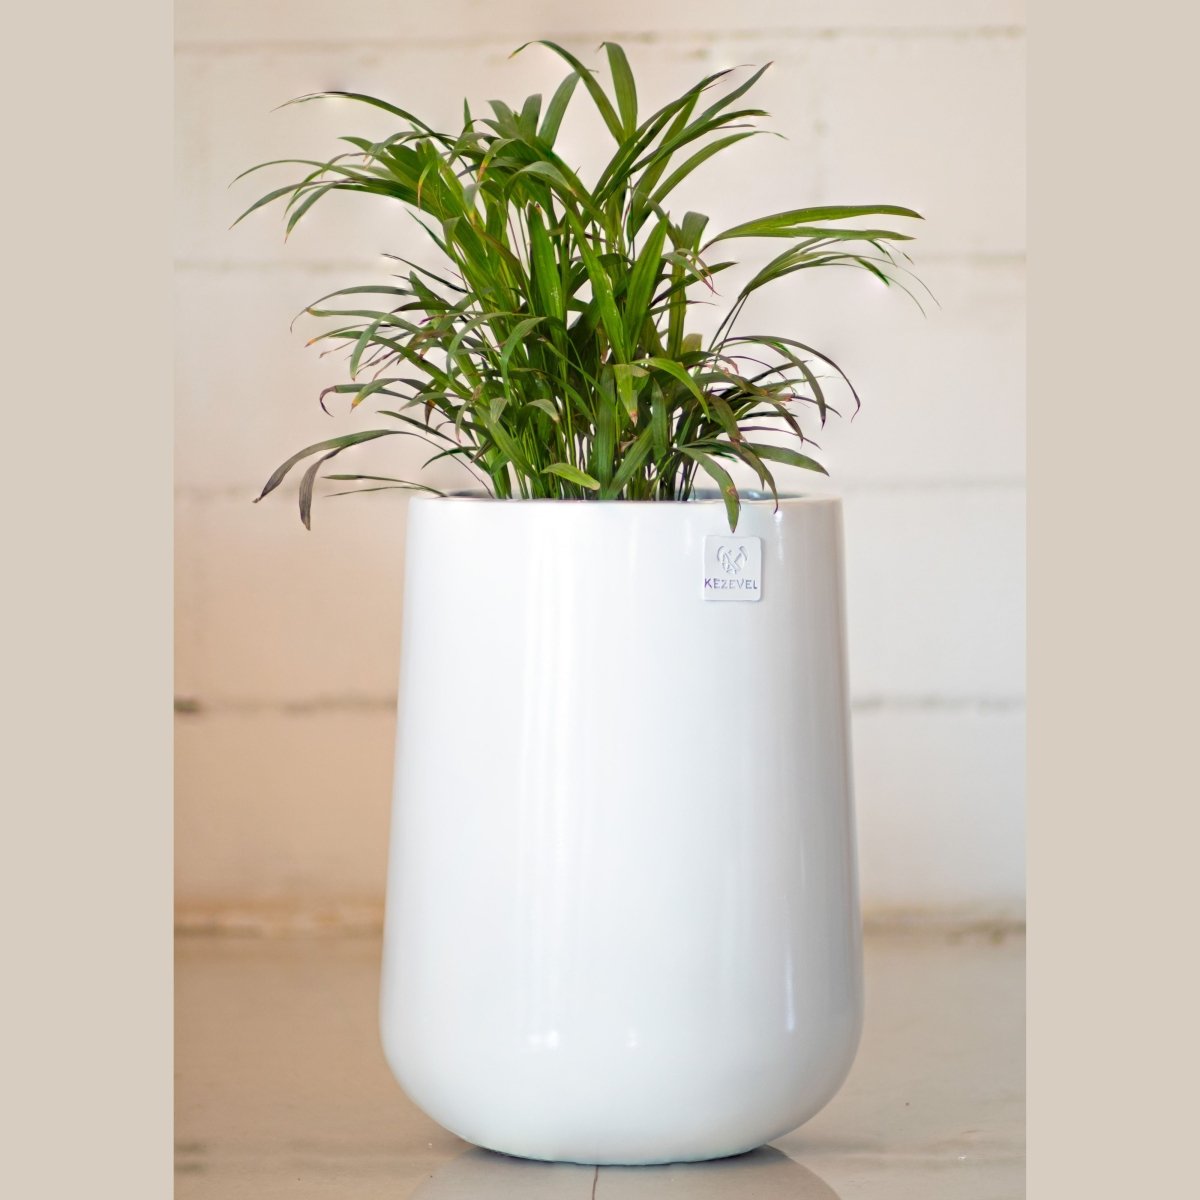 Kezevel Indoor Outdoor FRP Planters - Lightweight Durable Glossy White Finish Plumpy Flower Pot, Planter for Garden Décor